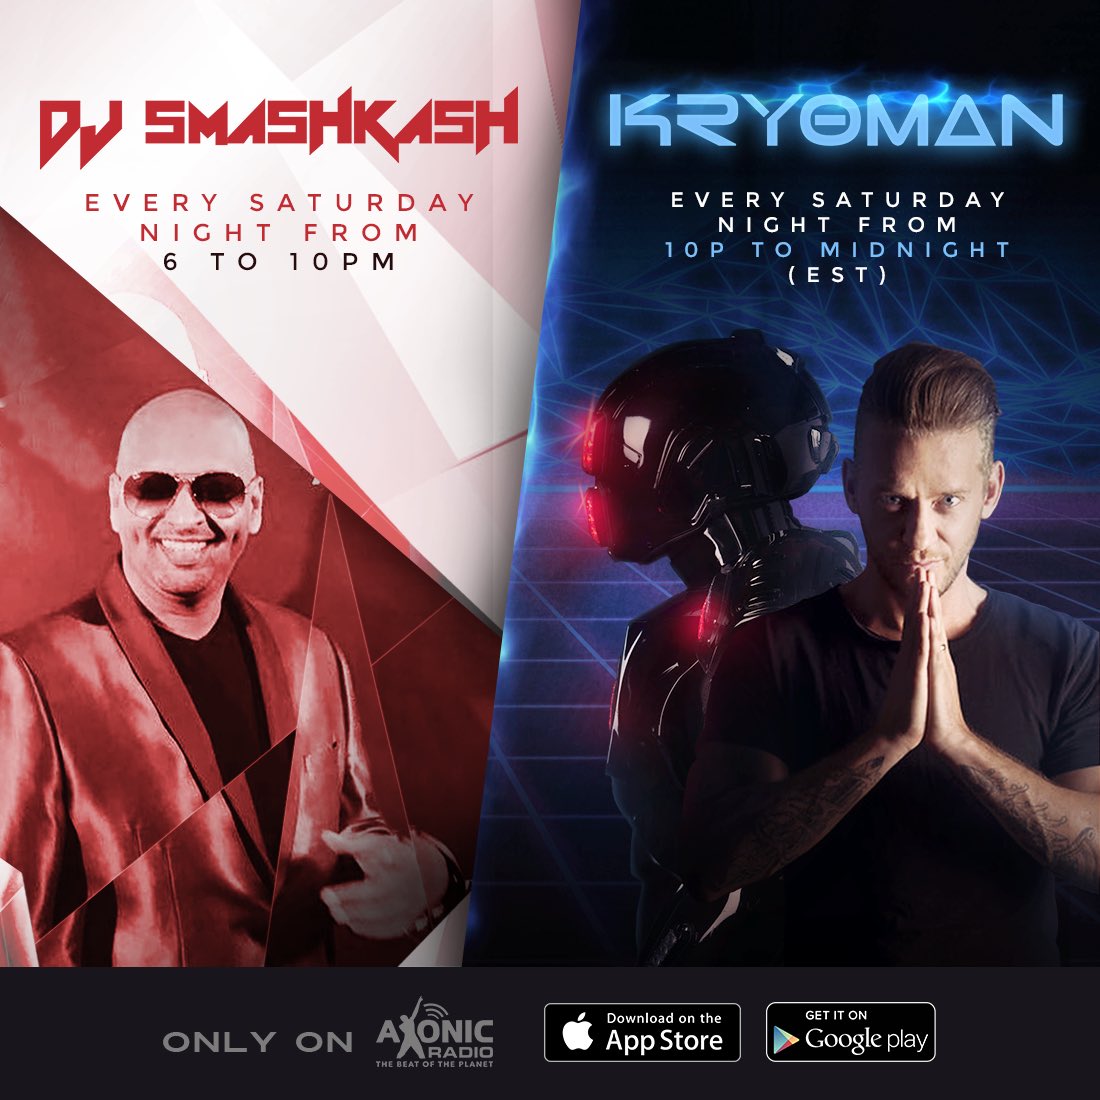 Download the @akonicradio app for free and tune into @DJSmashKASH & @Kryoman tonight!! https://t.co/6r3niB2dB5 https://t.co/s5zJs58cxW